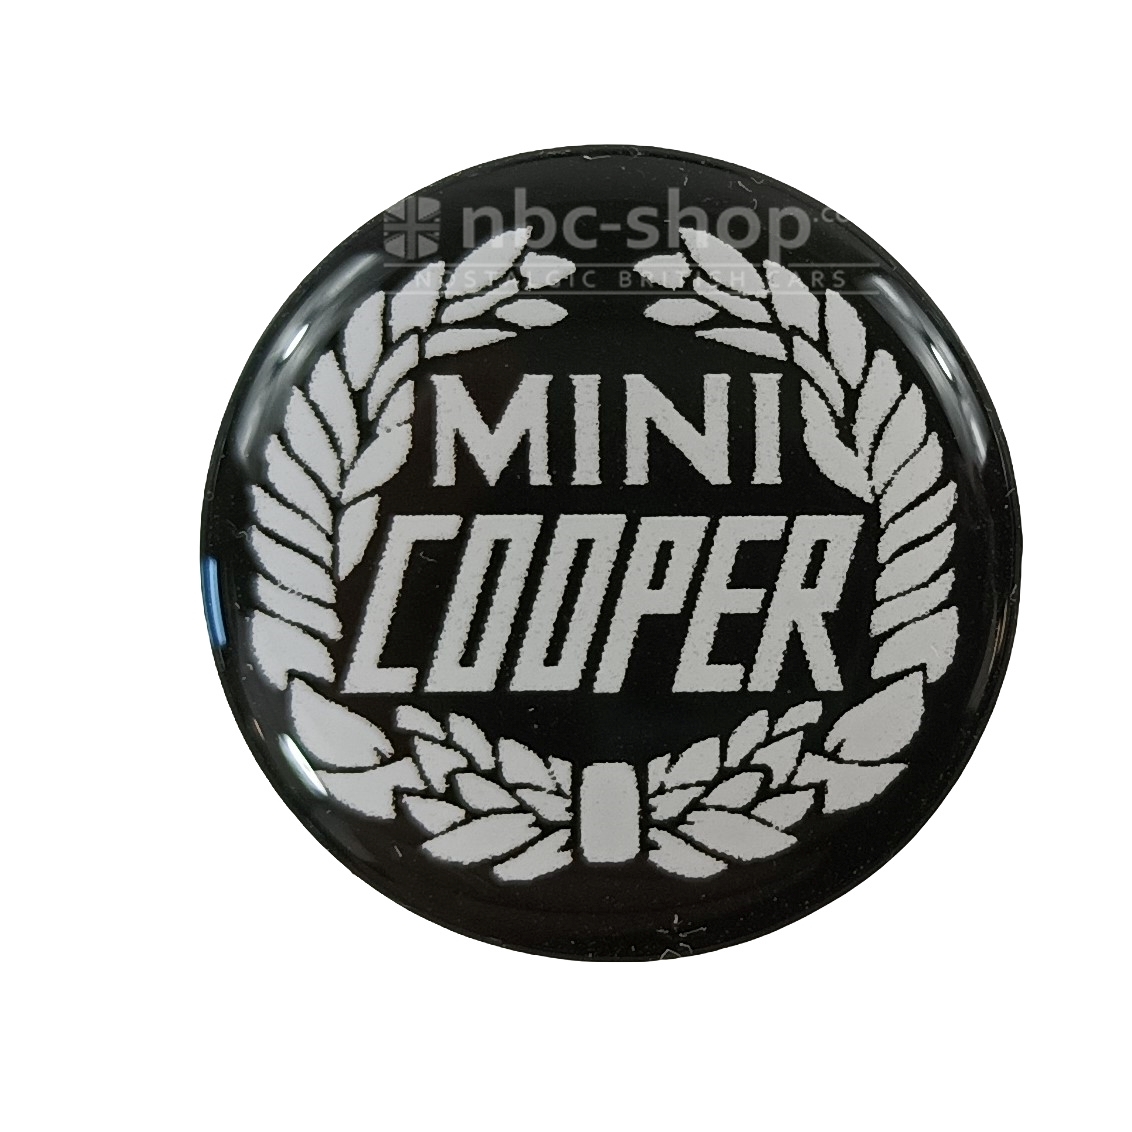 https://media.cdnws.com/_i/35213/5721/375/23/motolitasimcn-logo-pour-porte-clef-mini-cooper-noir-nbc-shop-1.jpeg